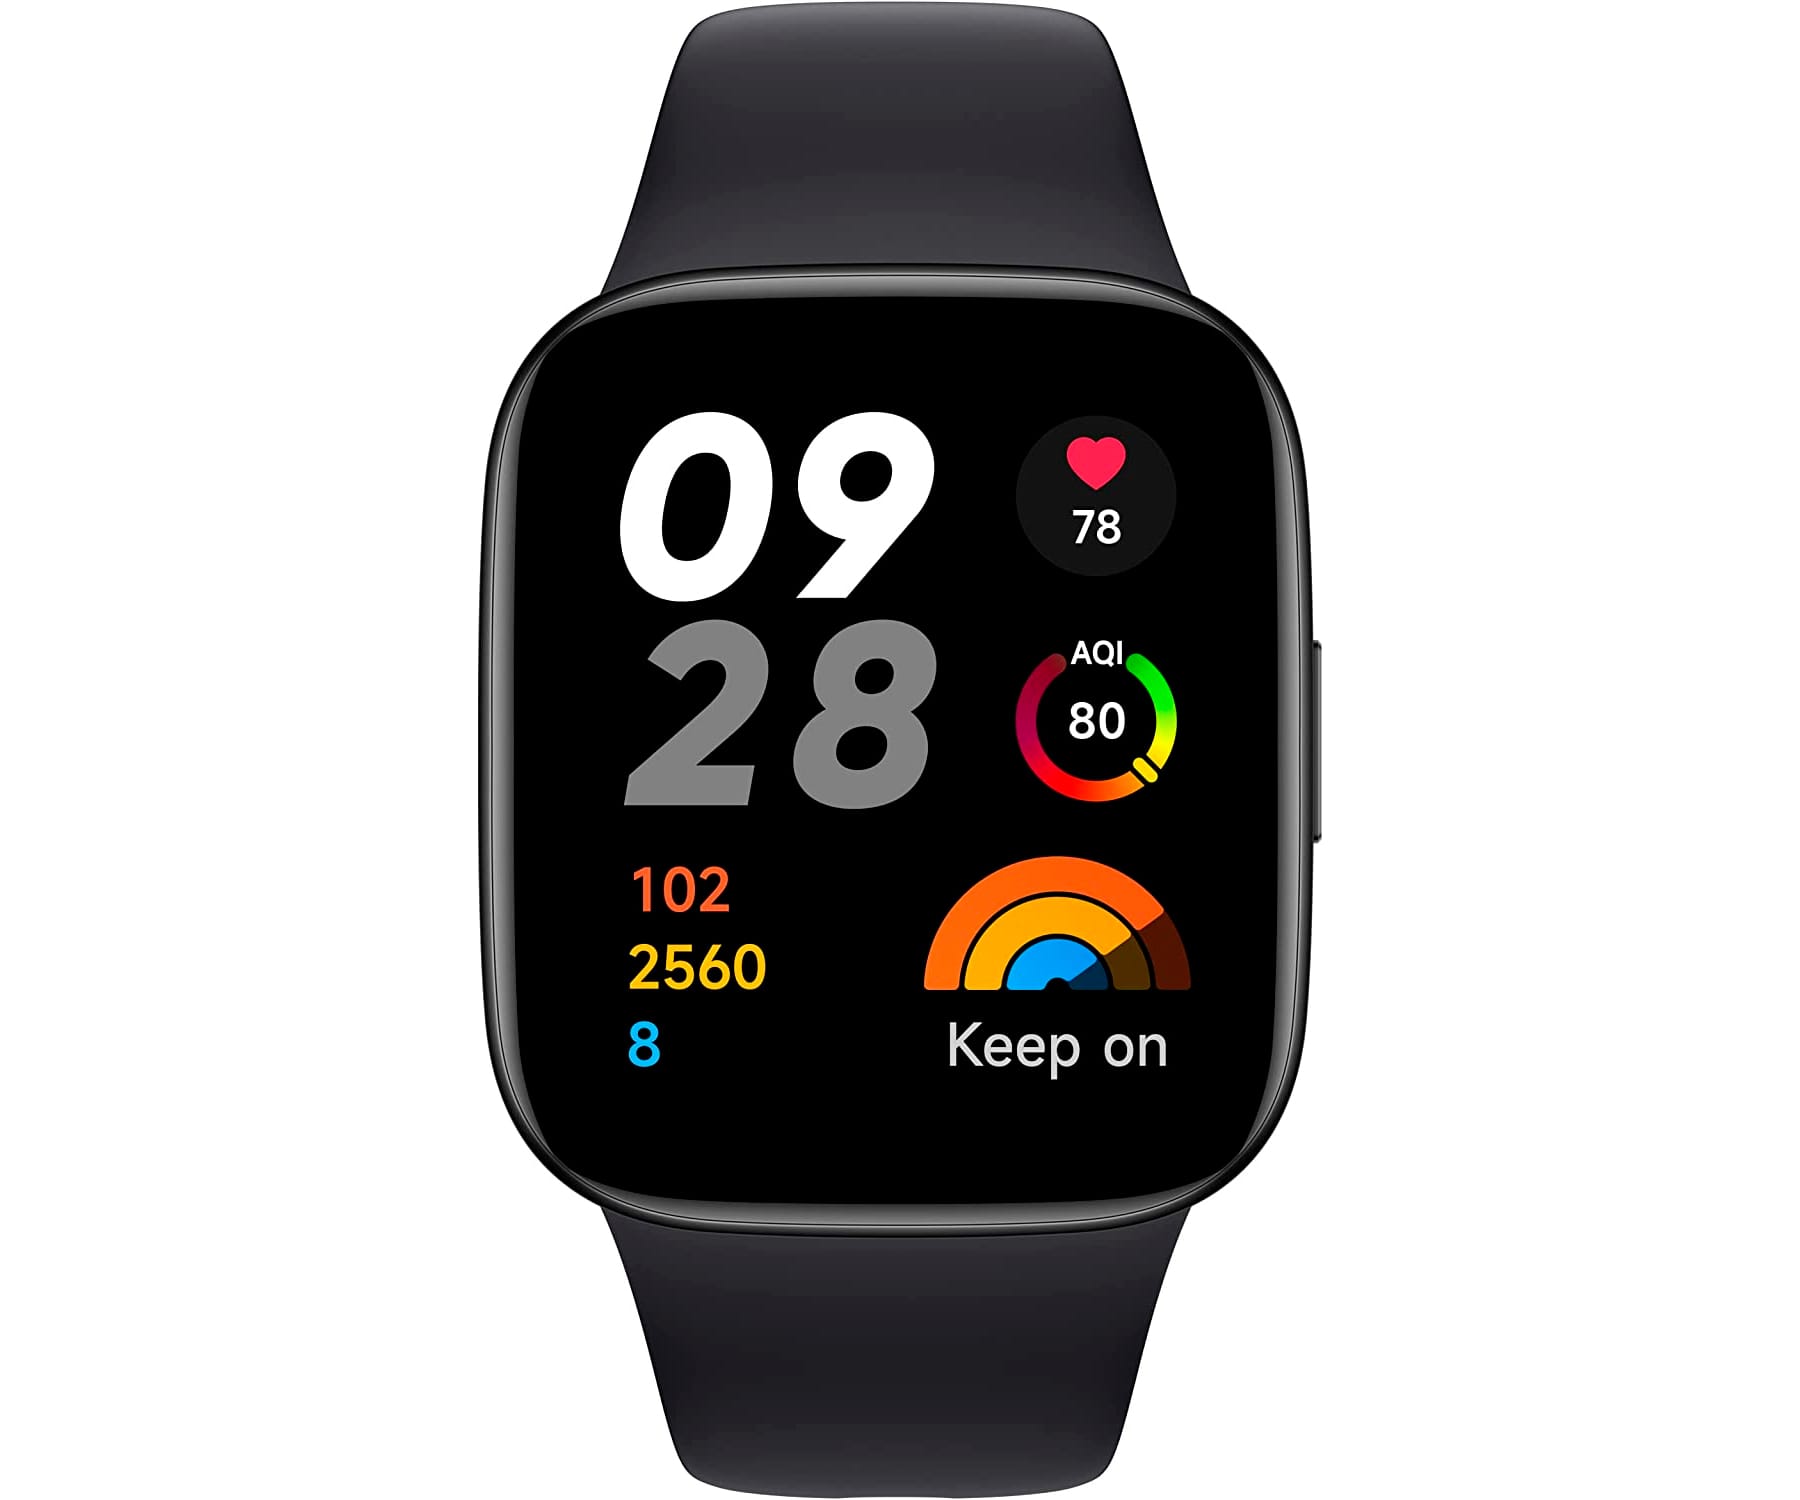 Correa de Silicona para Xiaomi Redmi Watch 2 Lite - Negra